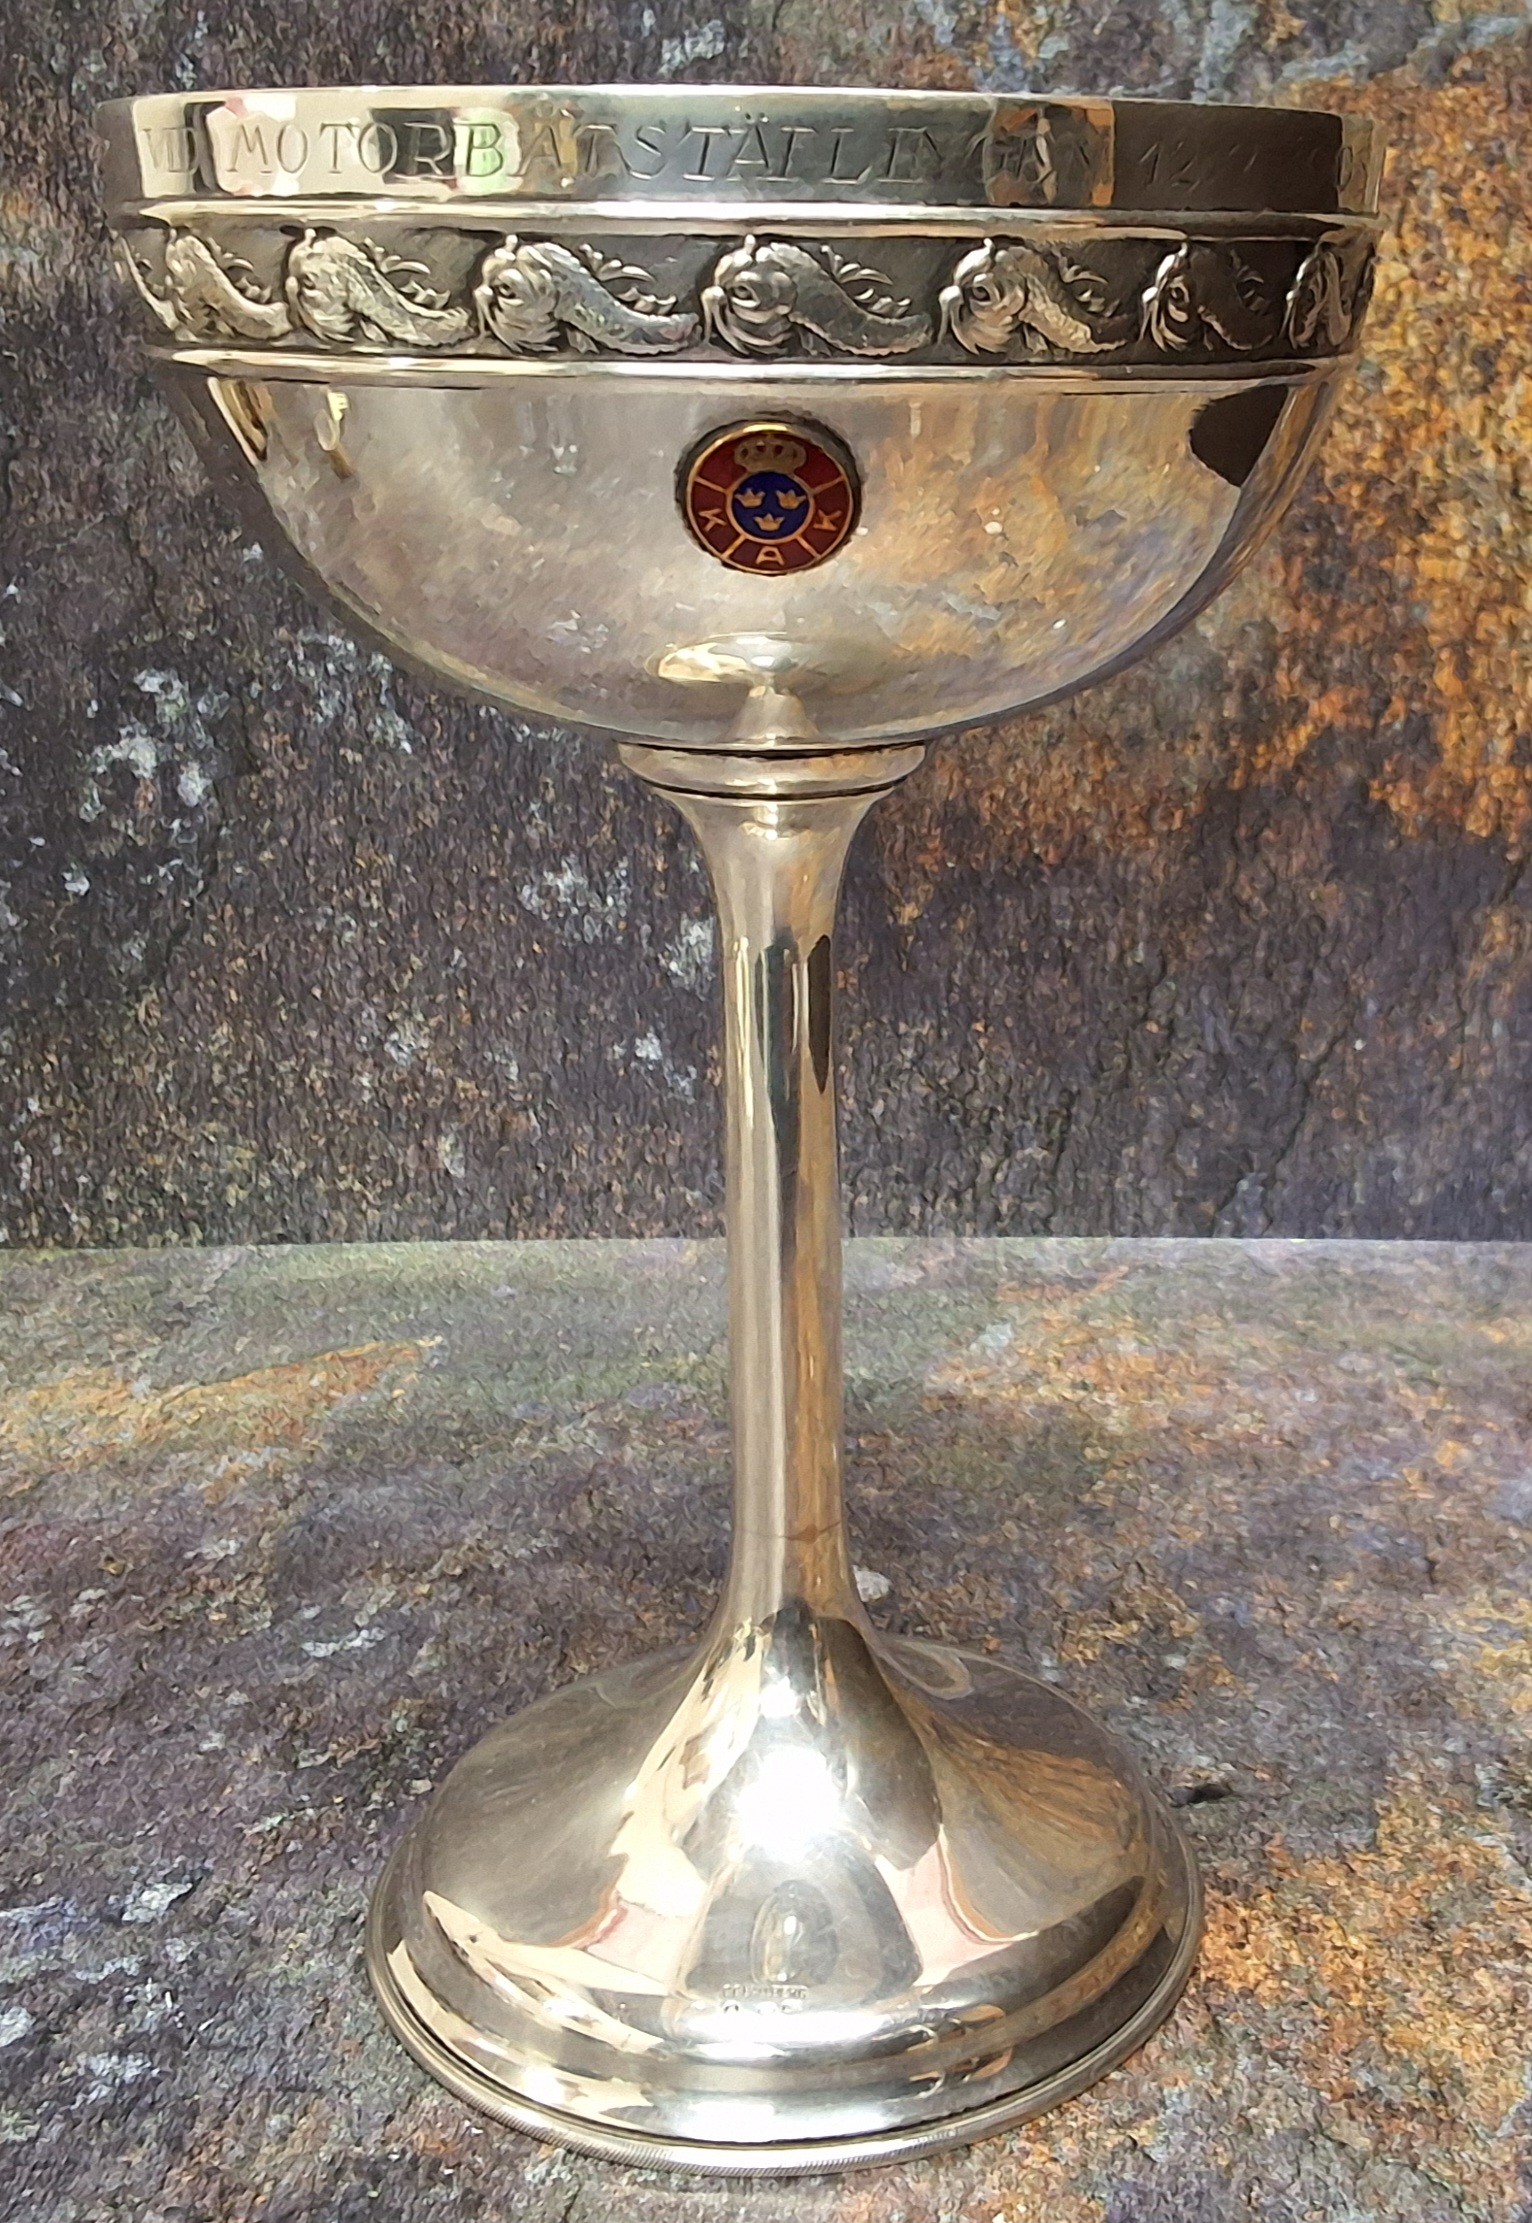 Motor Sport - a Swedish silver pedestal trophy cup, inscribed Hederspris Vid Motorbatstaflingen 12: